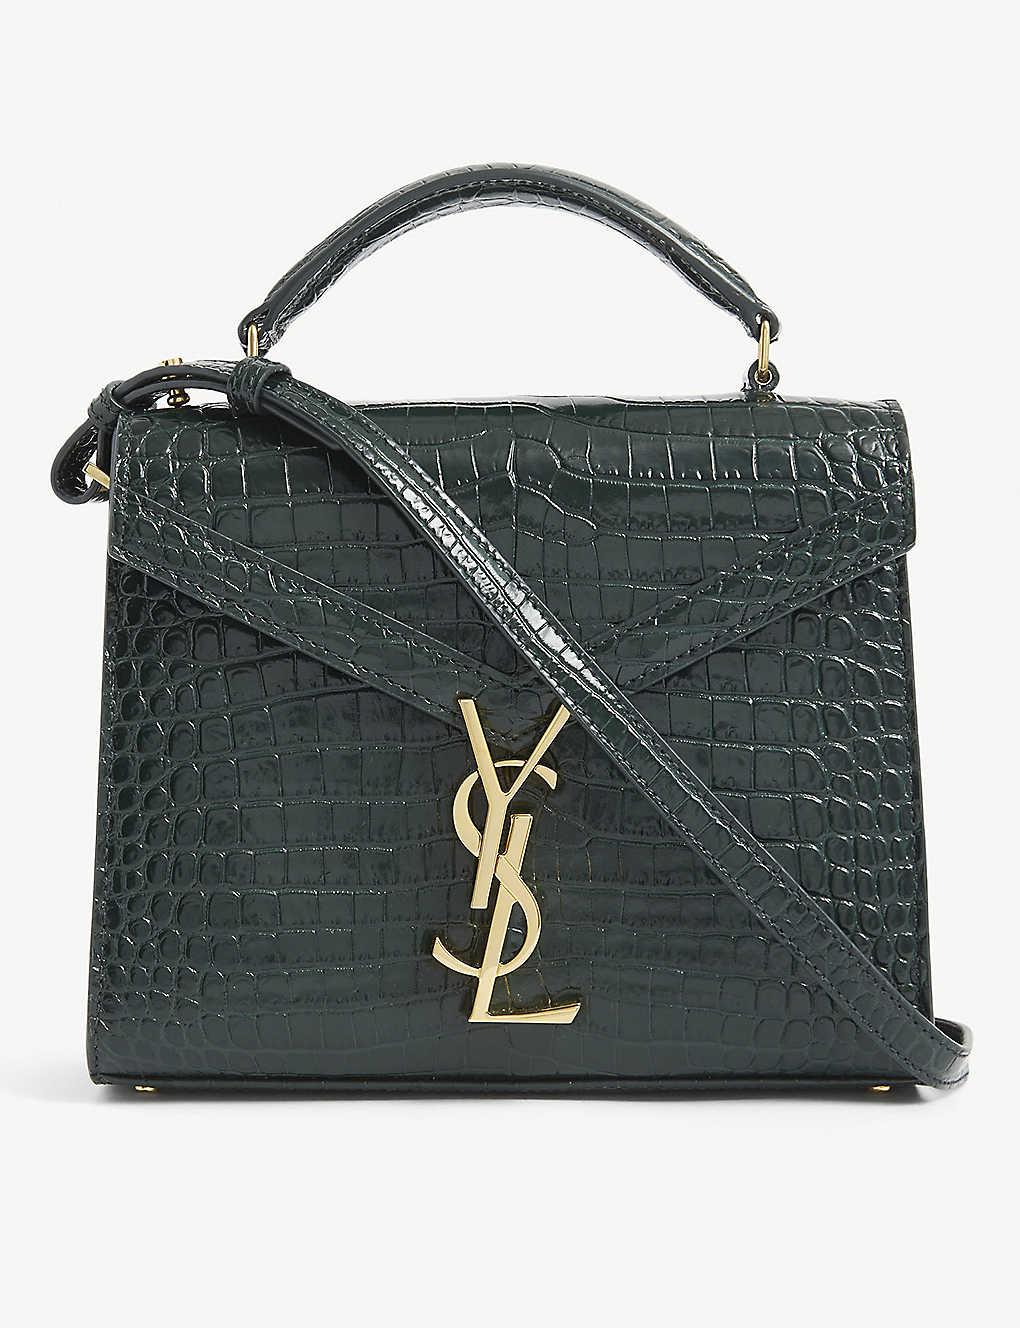 A Louis Vuitton Monogram Mint Green patent leather handbag